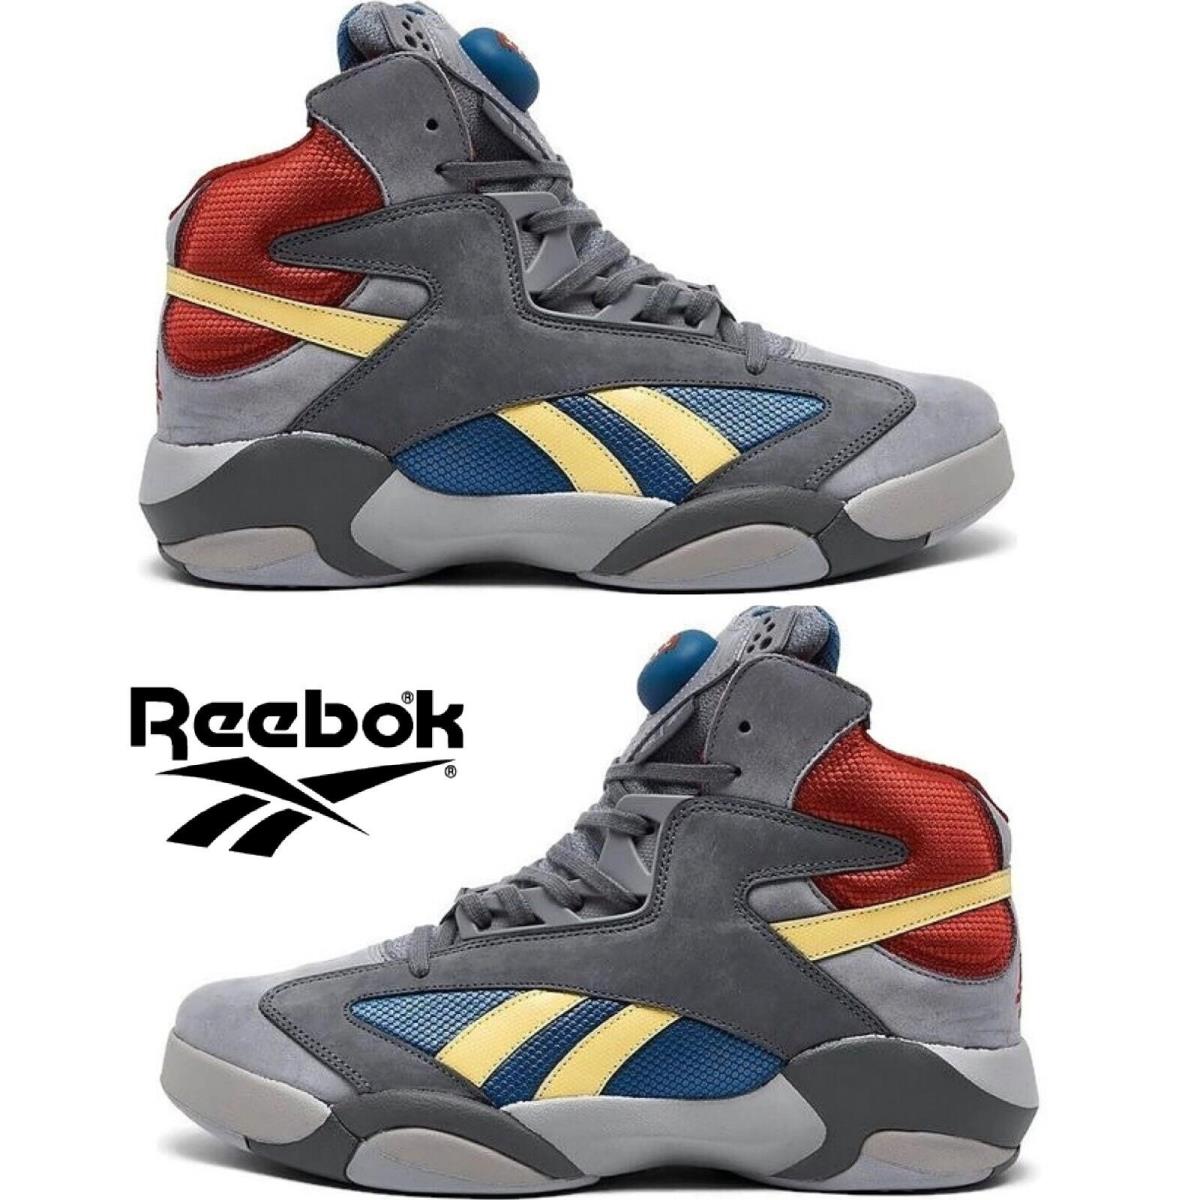 Reebok Shaq Attaq Retro Basketball Shoes Men`s Sneakers Running Casual Sport